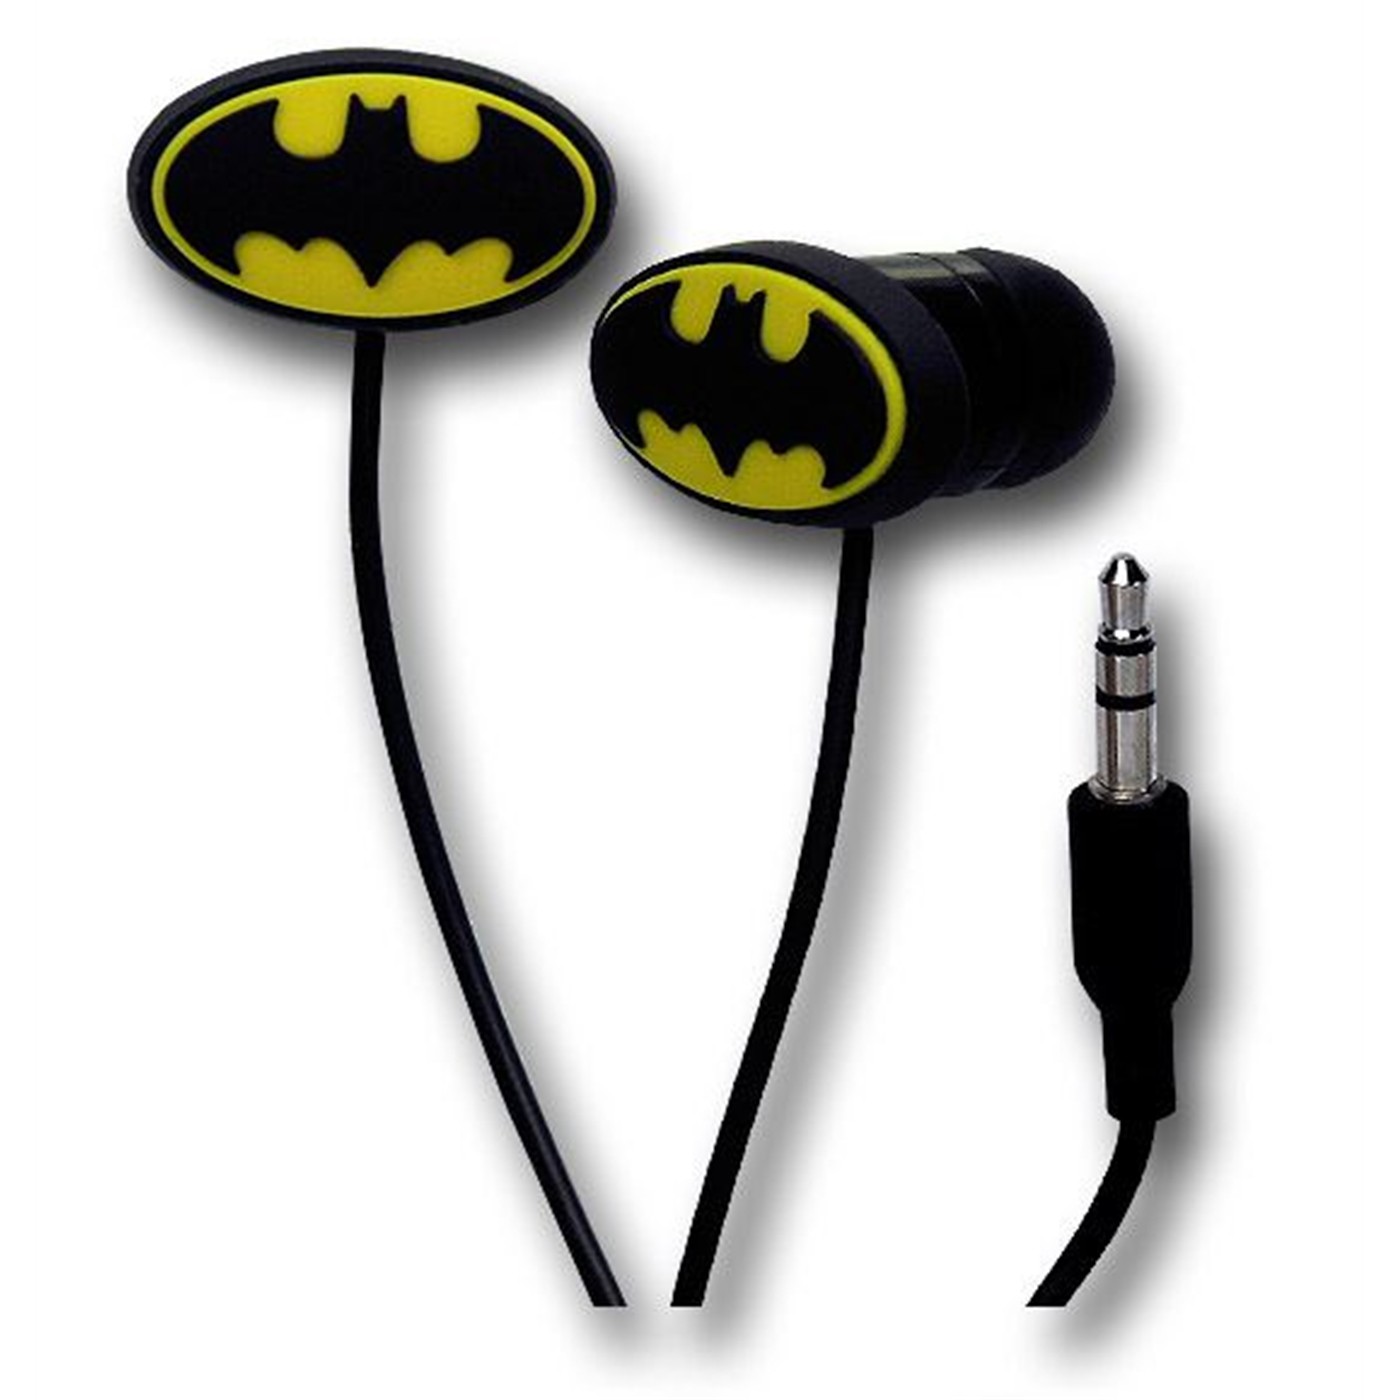 Batman Rubber Symbol Earphones